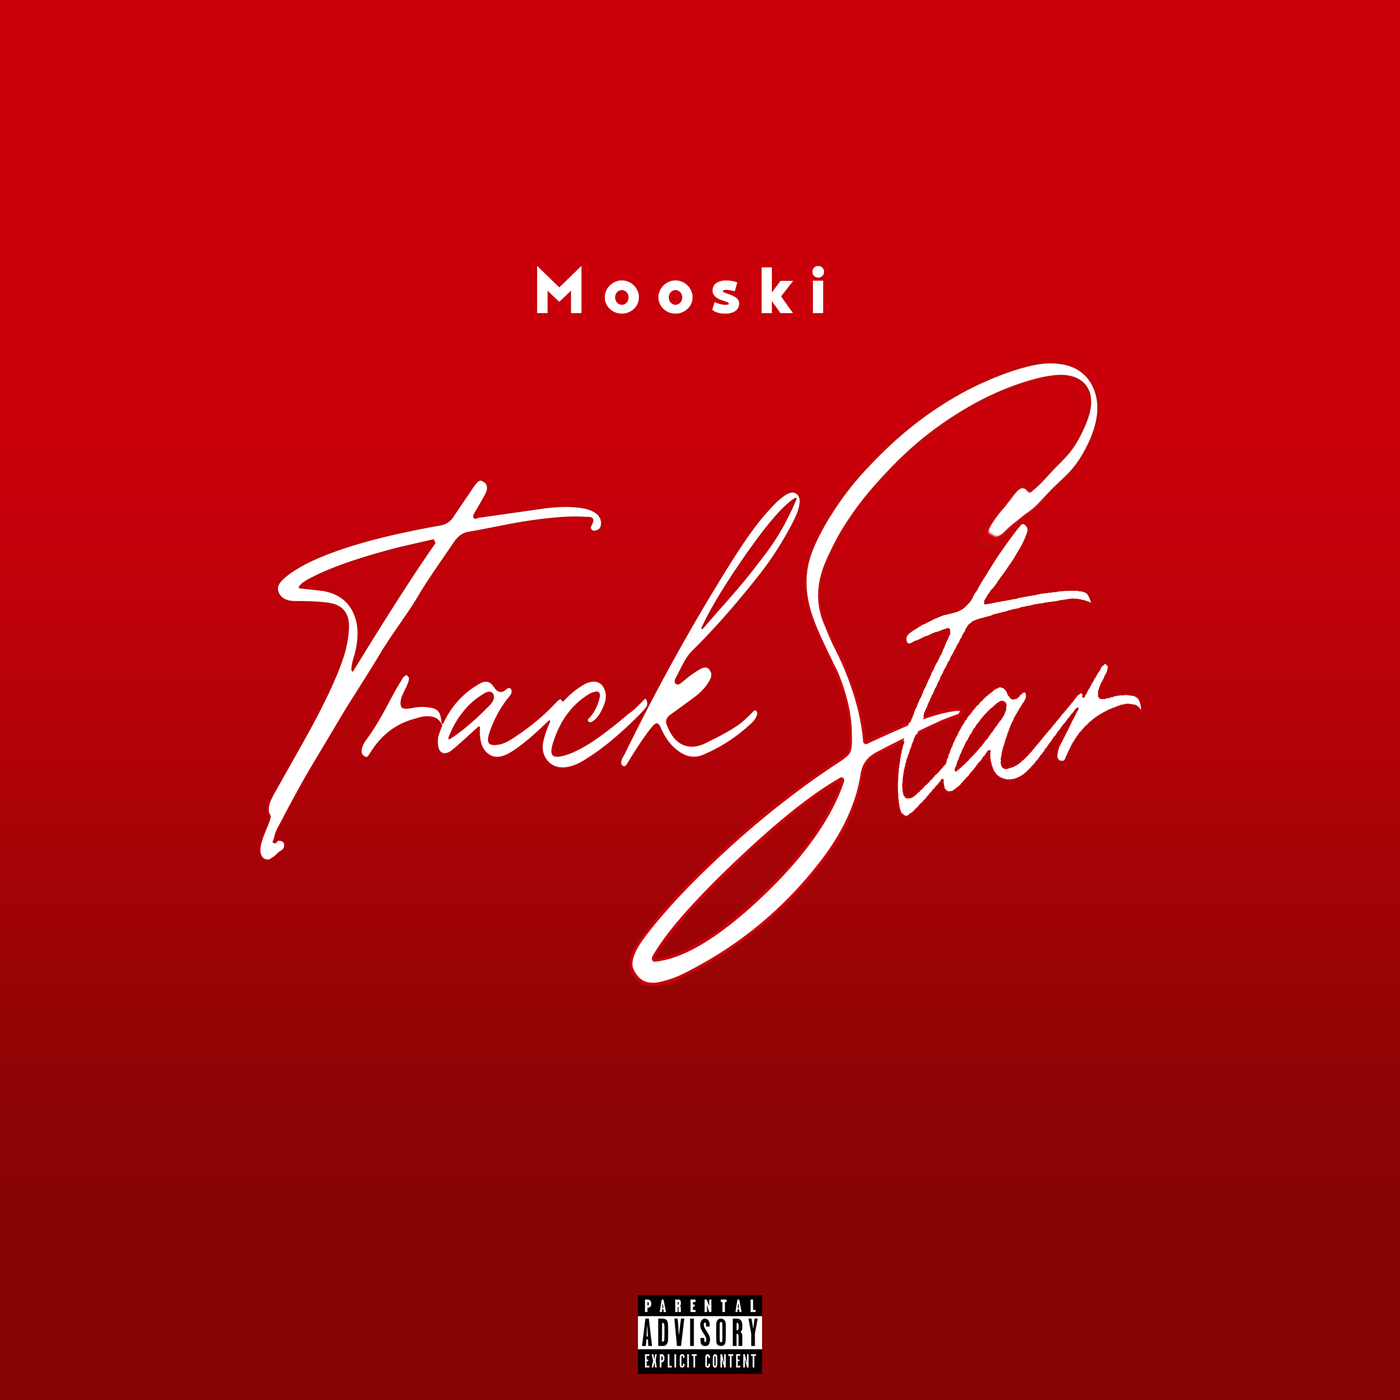 Download Mooski - Track Star